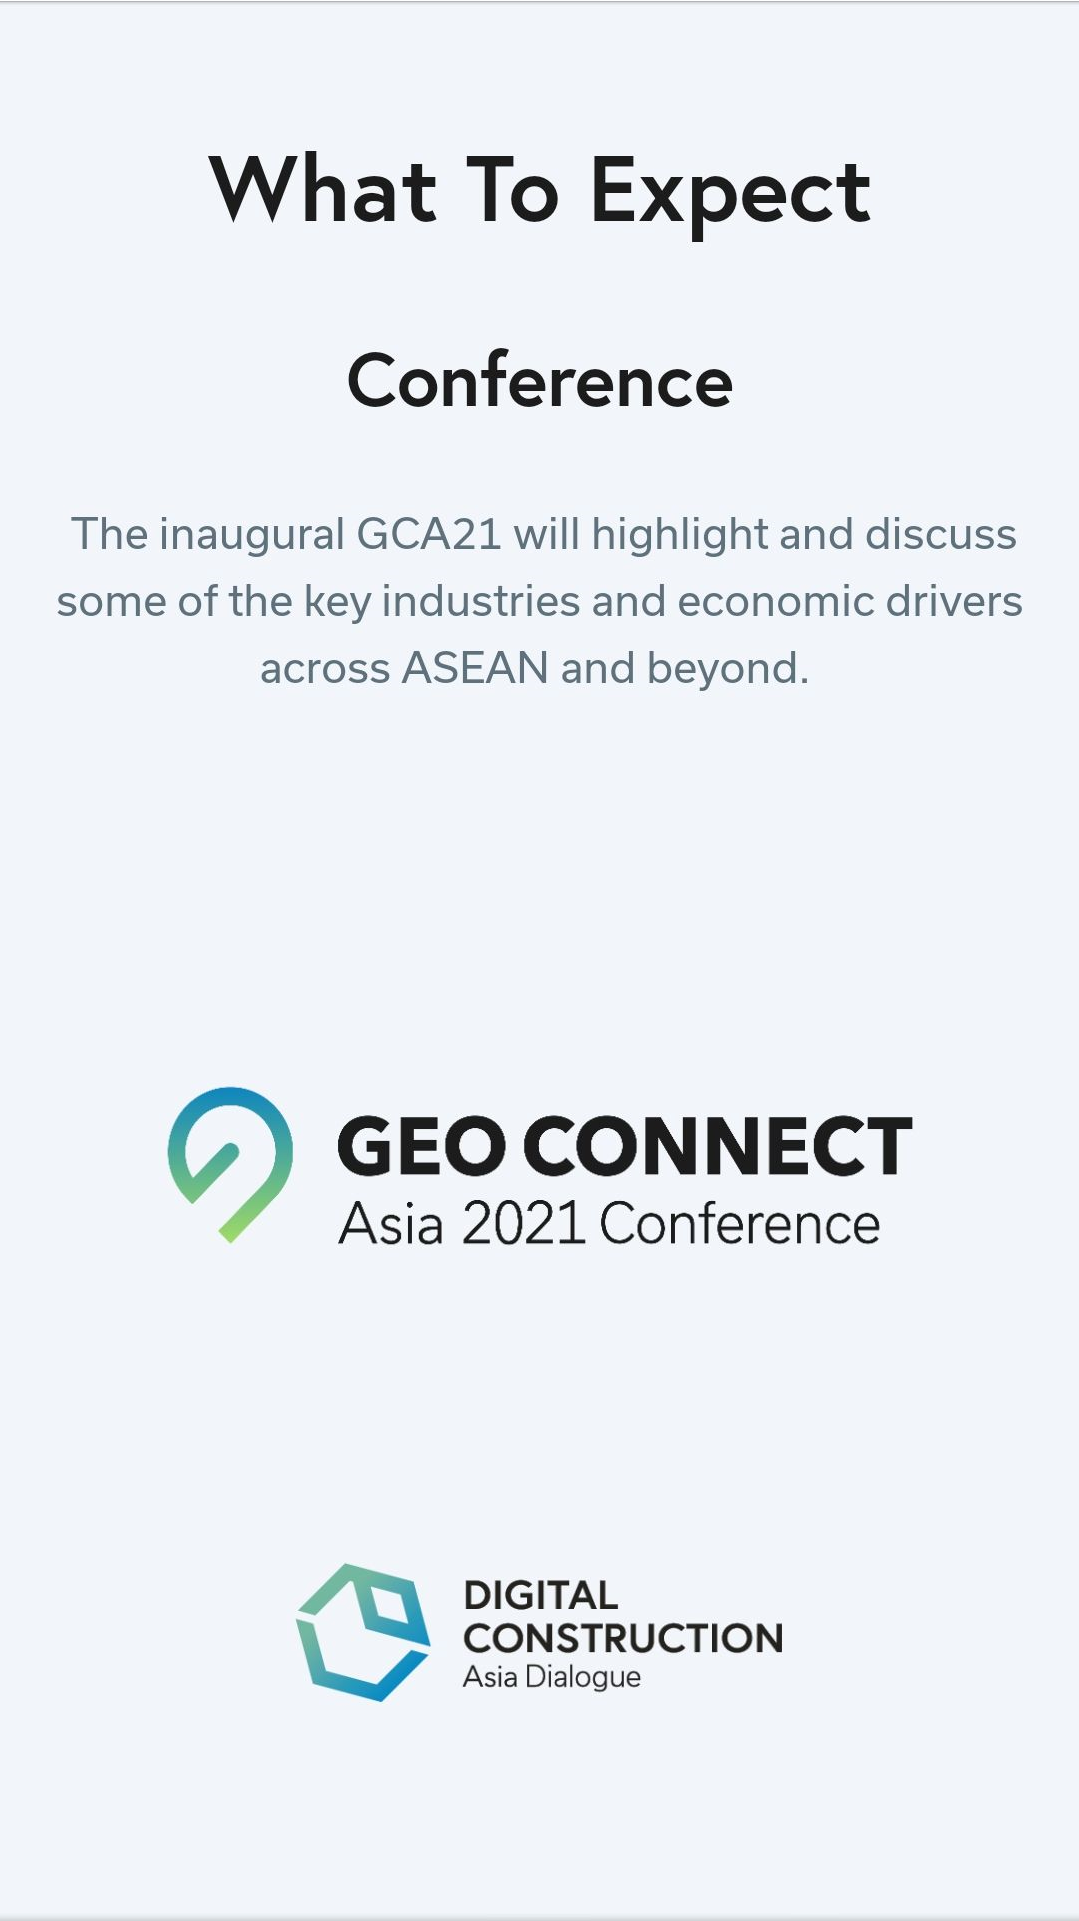 亞洲空間資訊盛事 Geo Connect Asia 2021